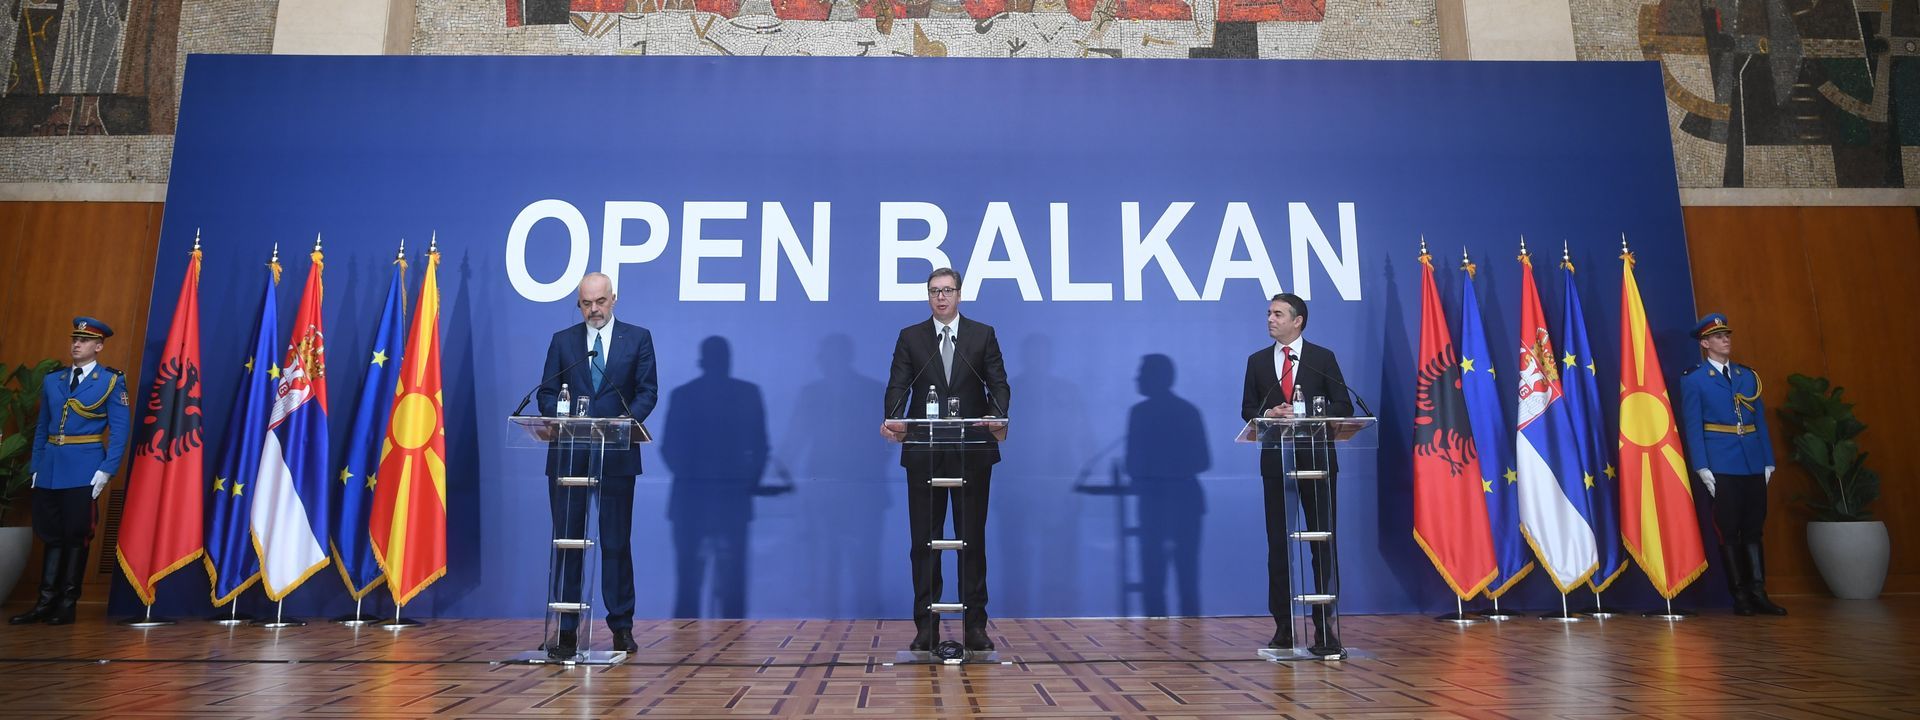 Otvoreni Balkan: Domaći naziv za CEFTA sporazum? 